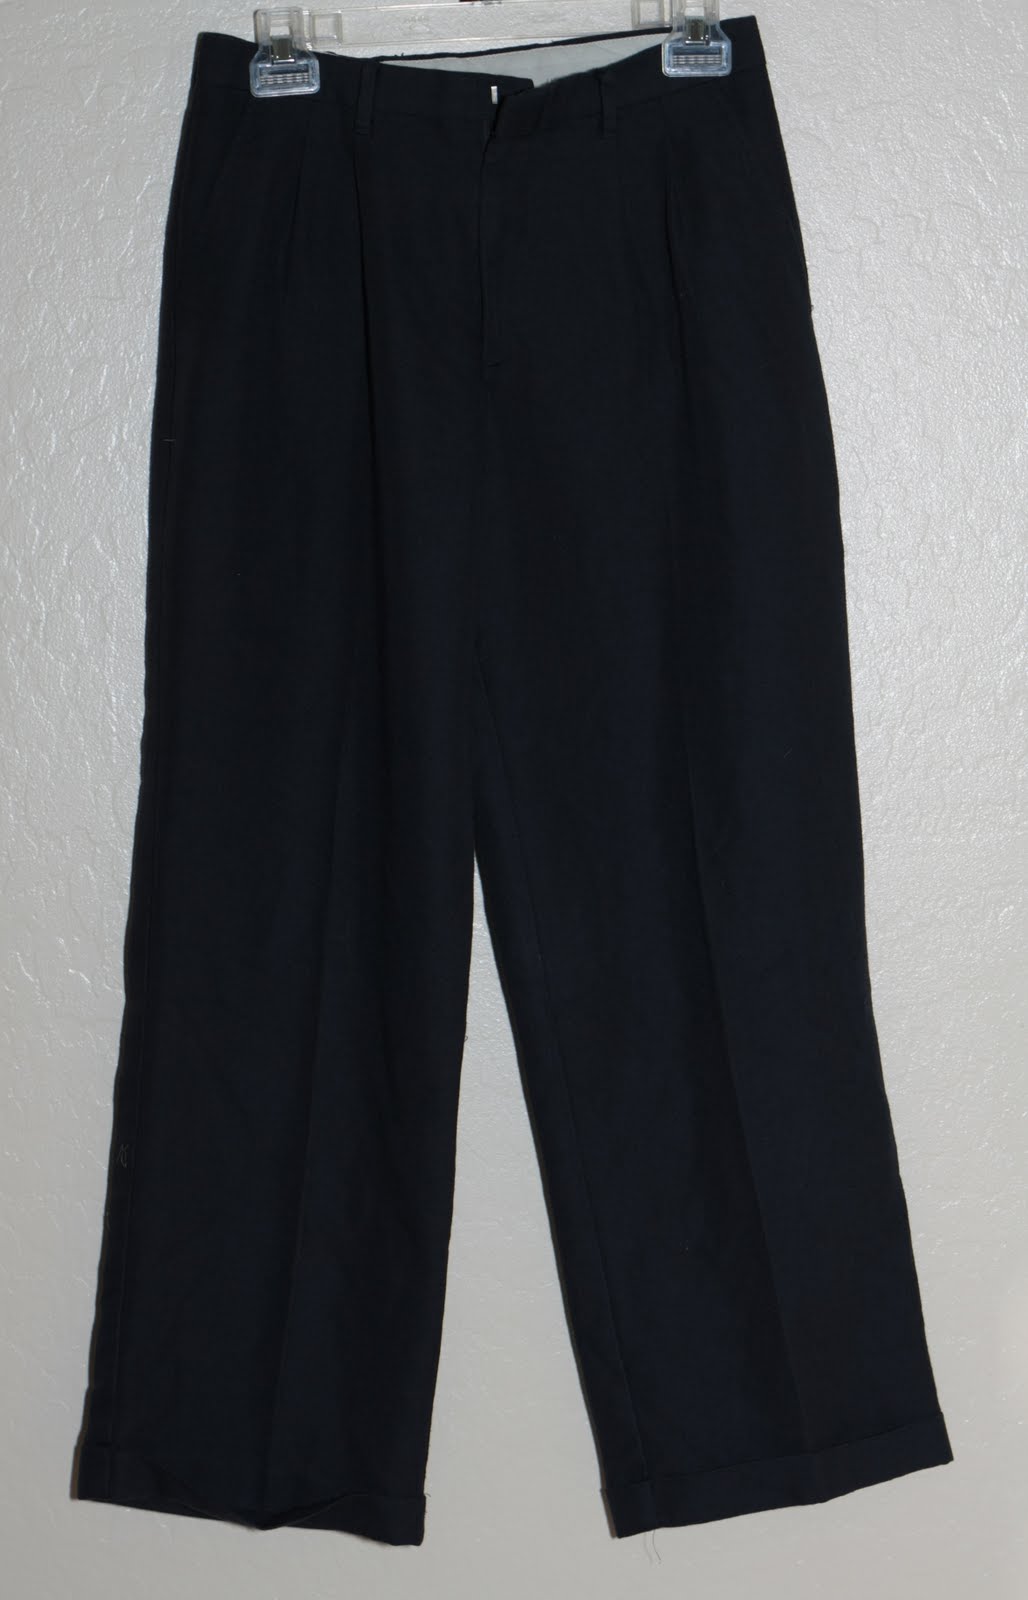 Teresa's Tag Sale: item # 19 boys church pants - $3